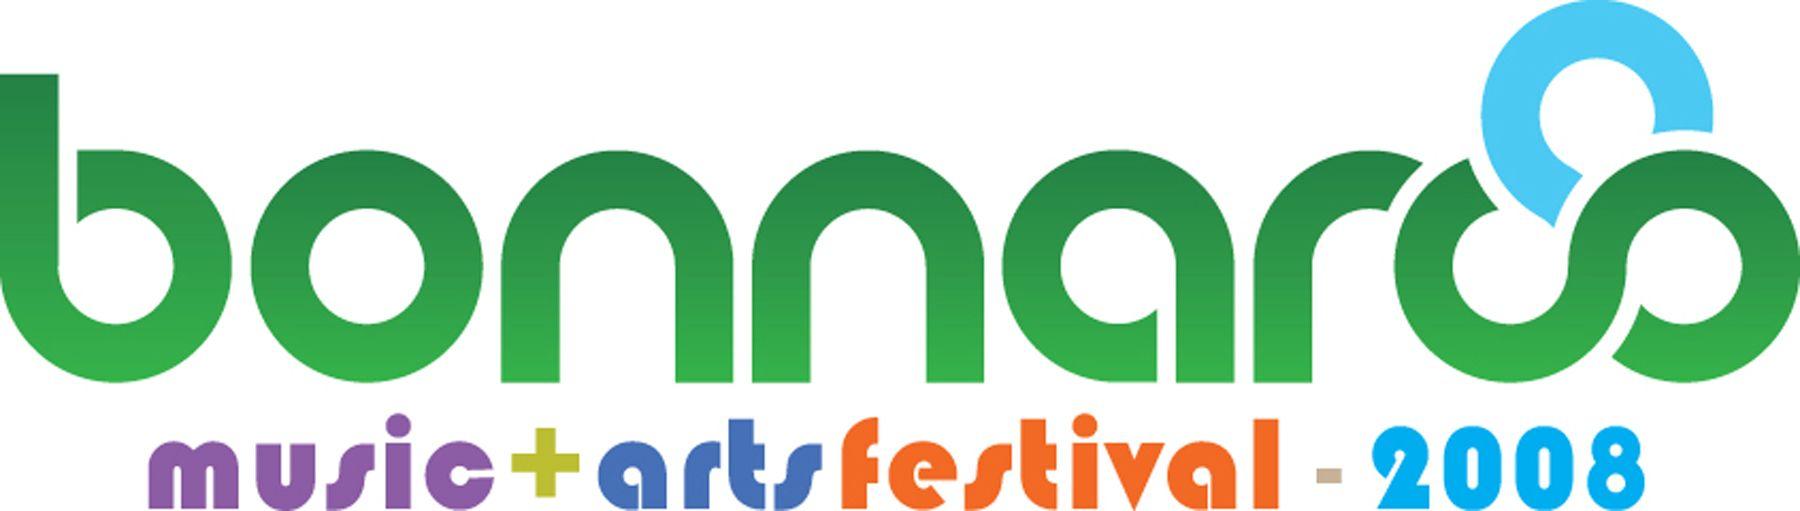 Bonnaroo Logo - Bonnaroo Music & Arts Festival logo 2008. Fun Bonnaroo Stuff